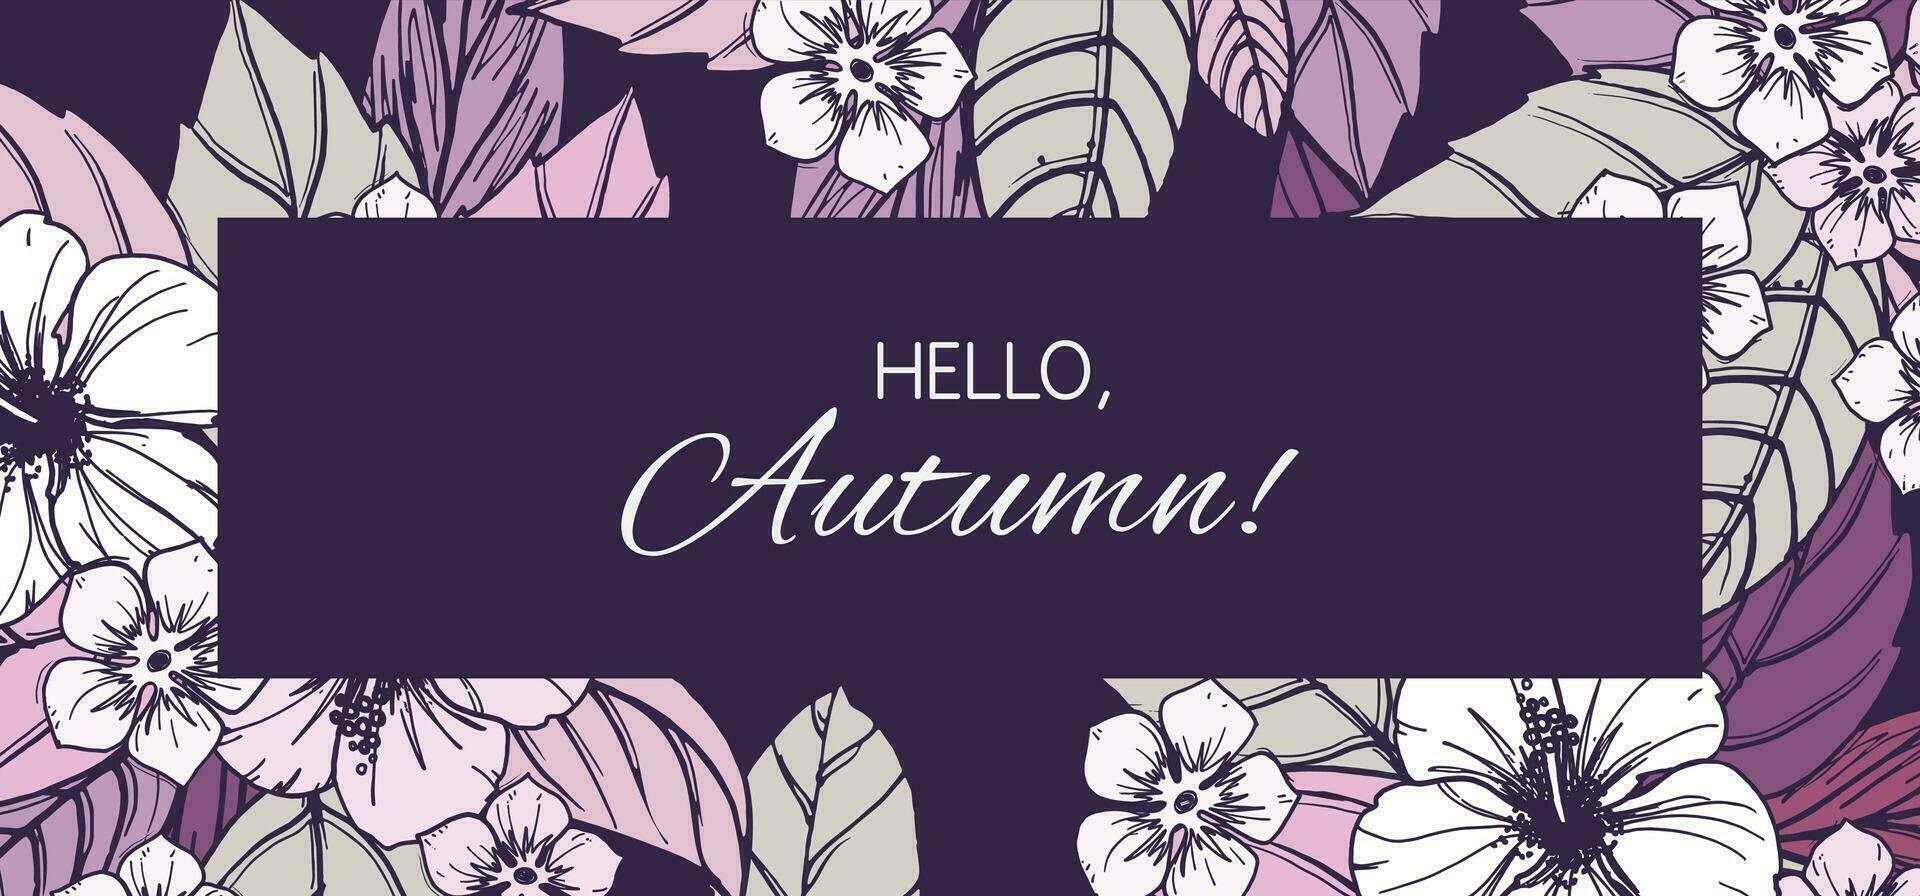 Herbst Blumen- Karte, Banner oder Poster Design vektor